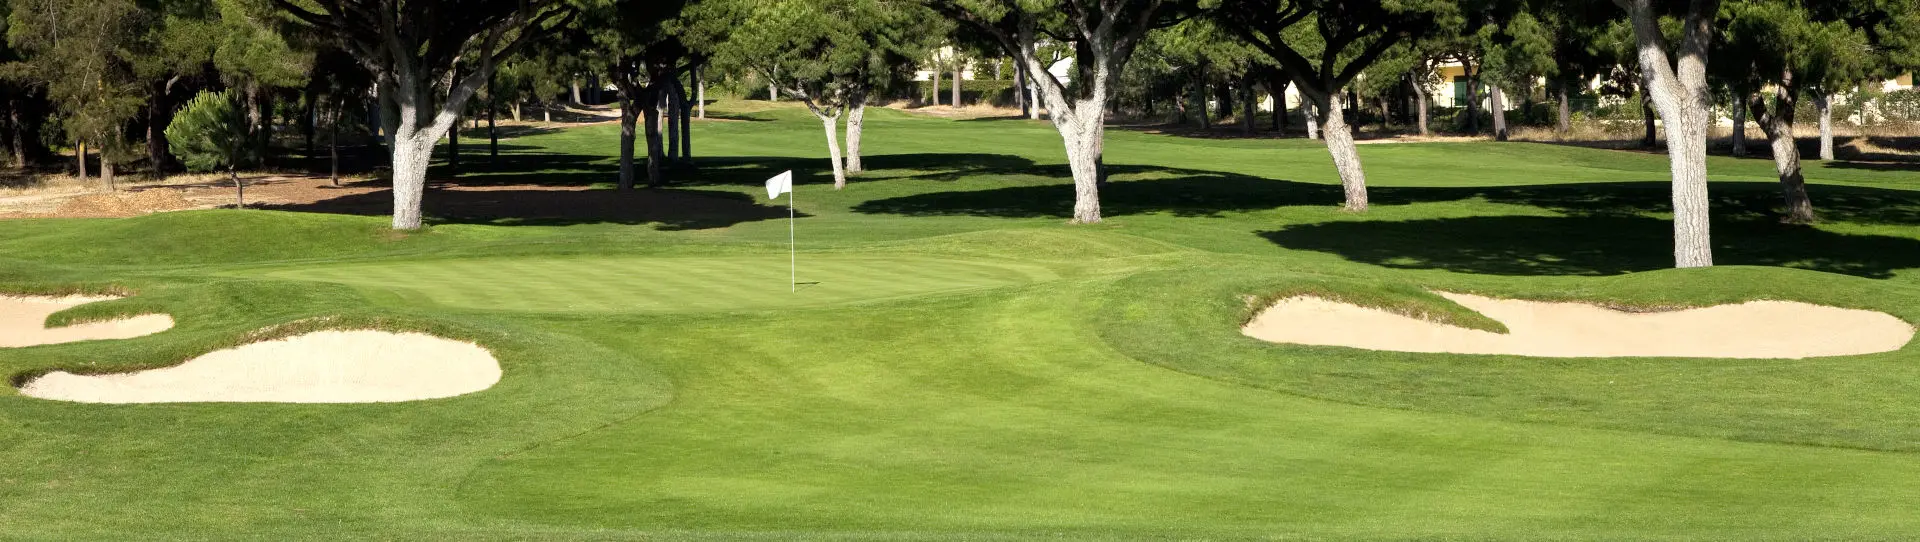 Portugal golf courses - Vilamoura Pinhal Golf Course - Photo 1